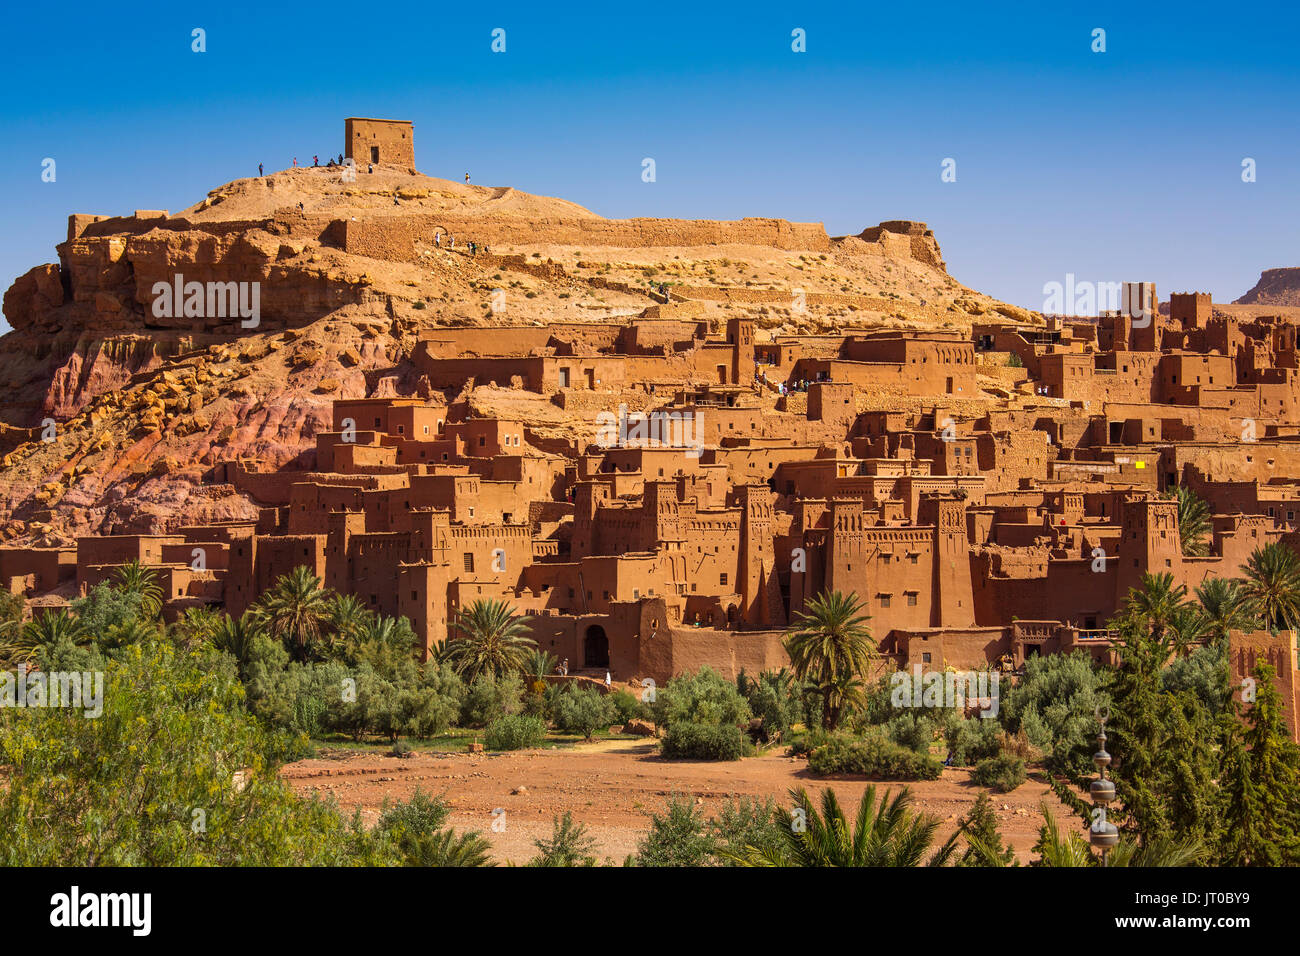 Ksar Ait Benhaddou, alte Berber adobe-brick Dorf oder Kasbah, Ouarzazate Provinz. UNESCO-Weltkulturerbe. Marokko, Maghreb Nordafrika Stockfoto